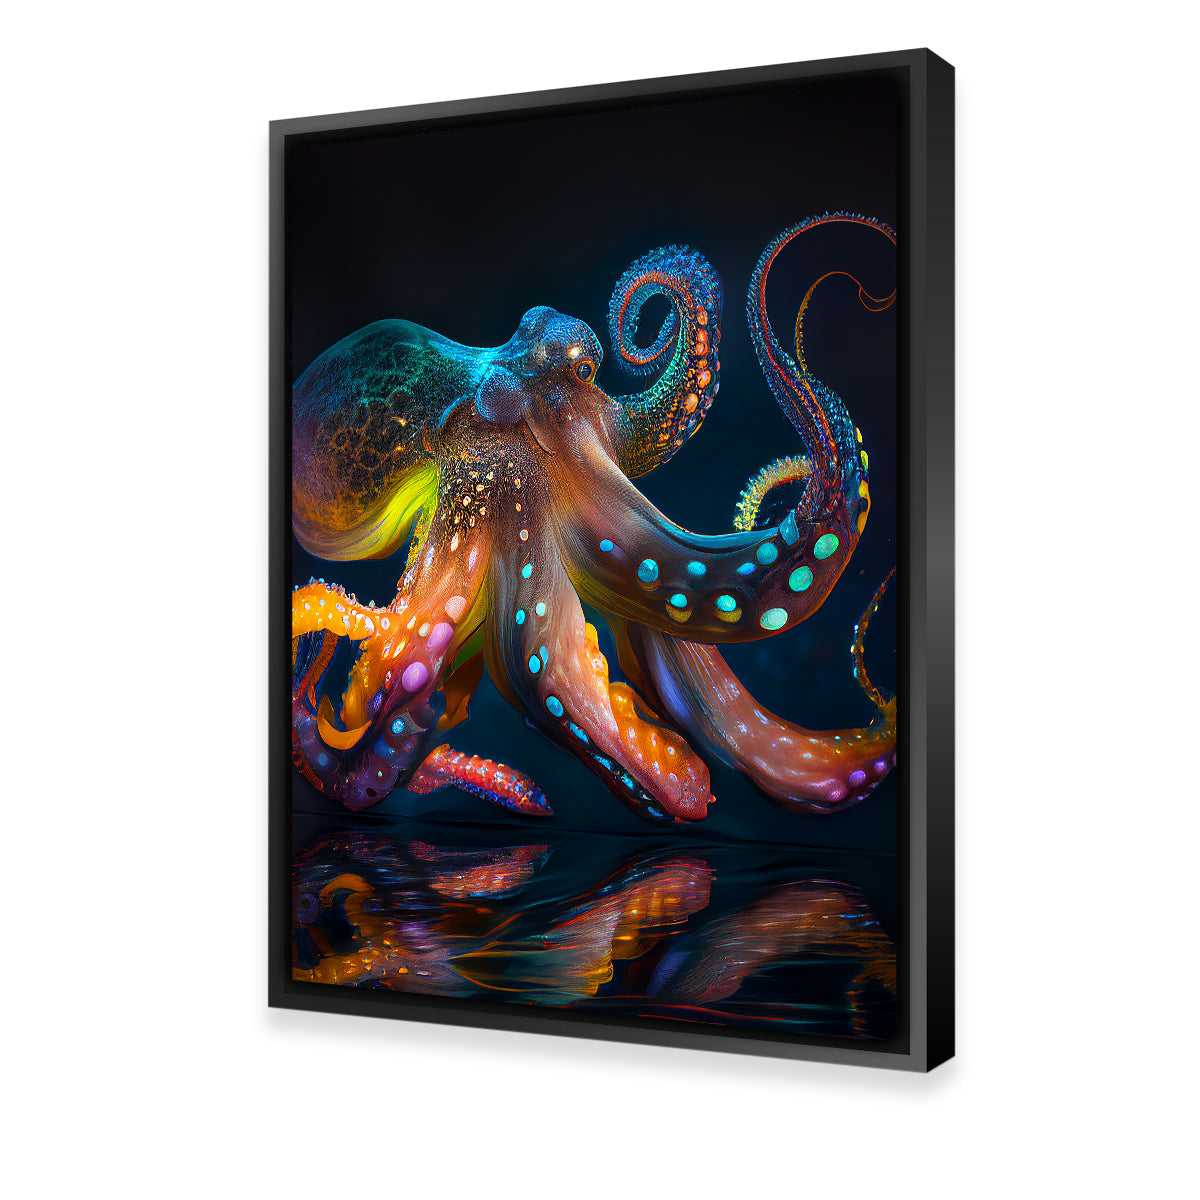 Glowing Octopus